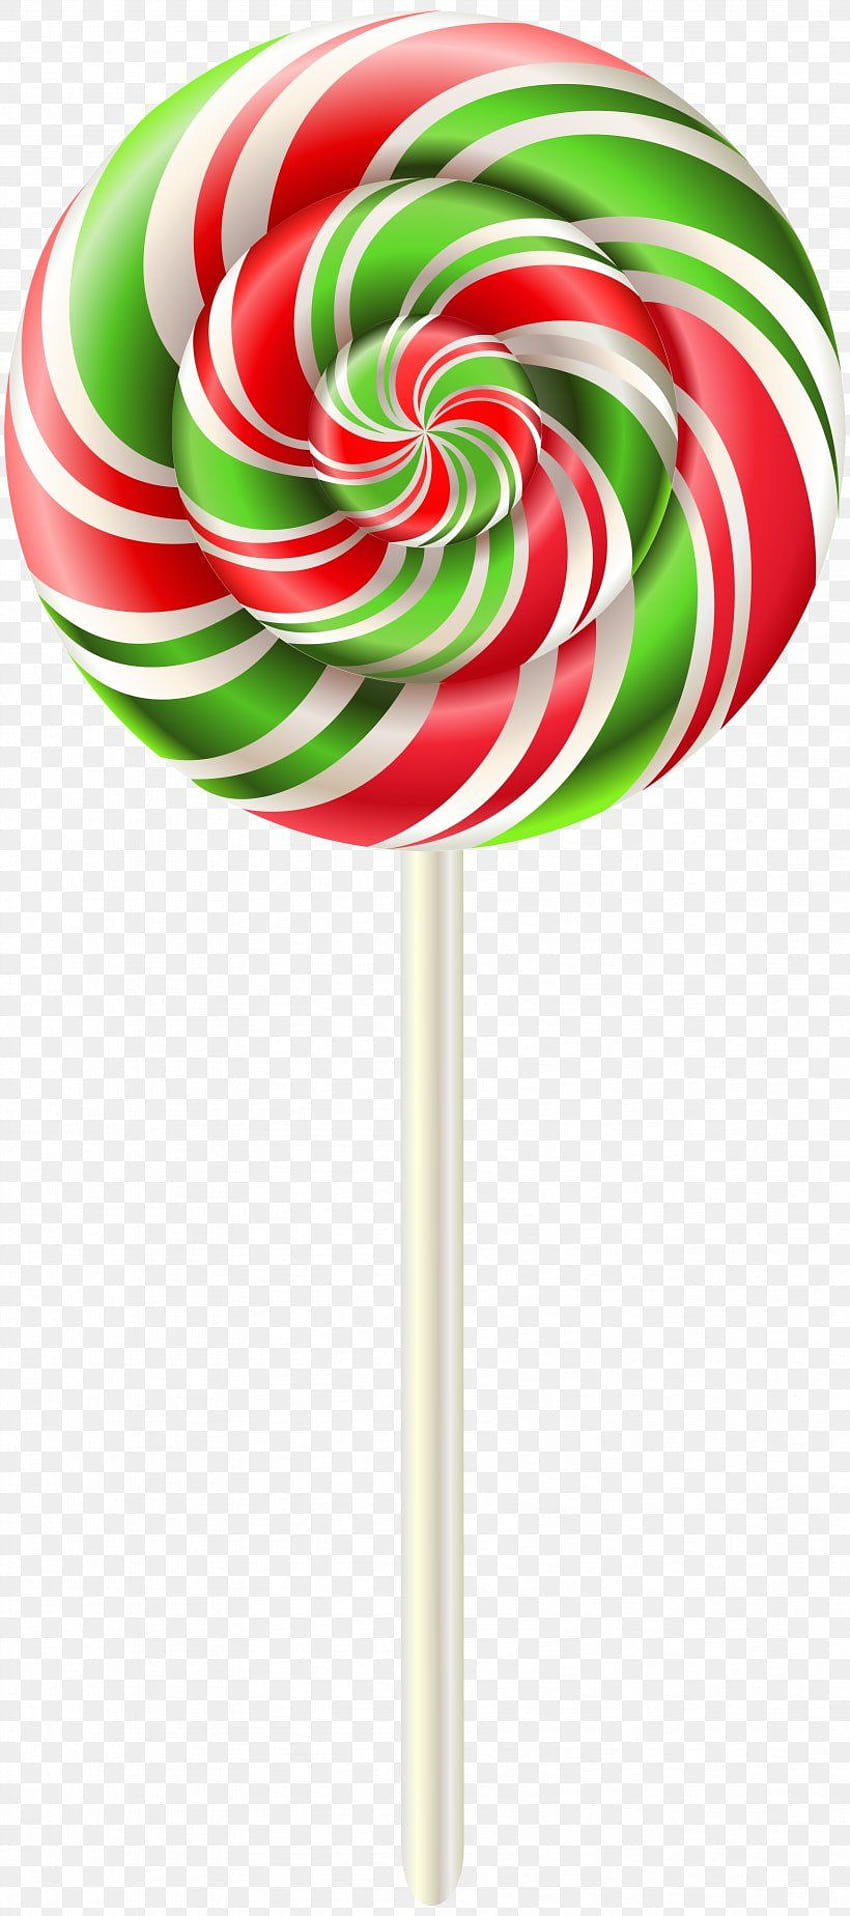 Lollipop Candy Clip Art, PNG, 3548x8000px, loli pop HD phone wallpaper